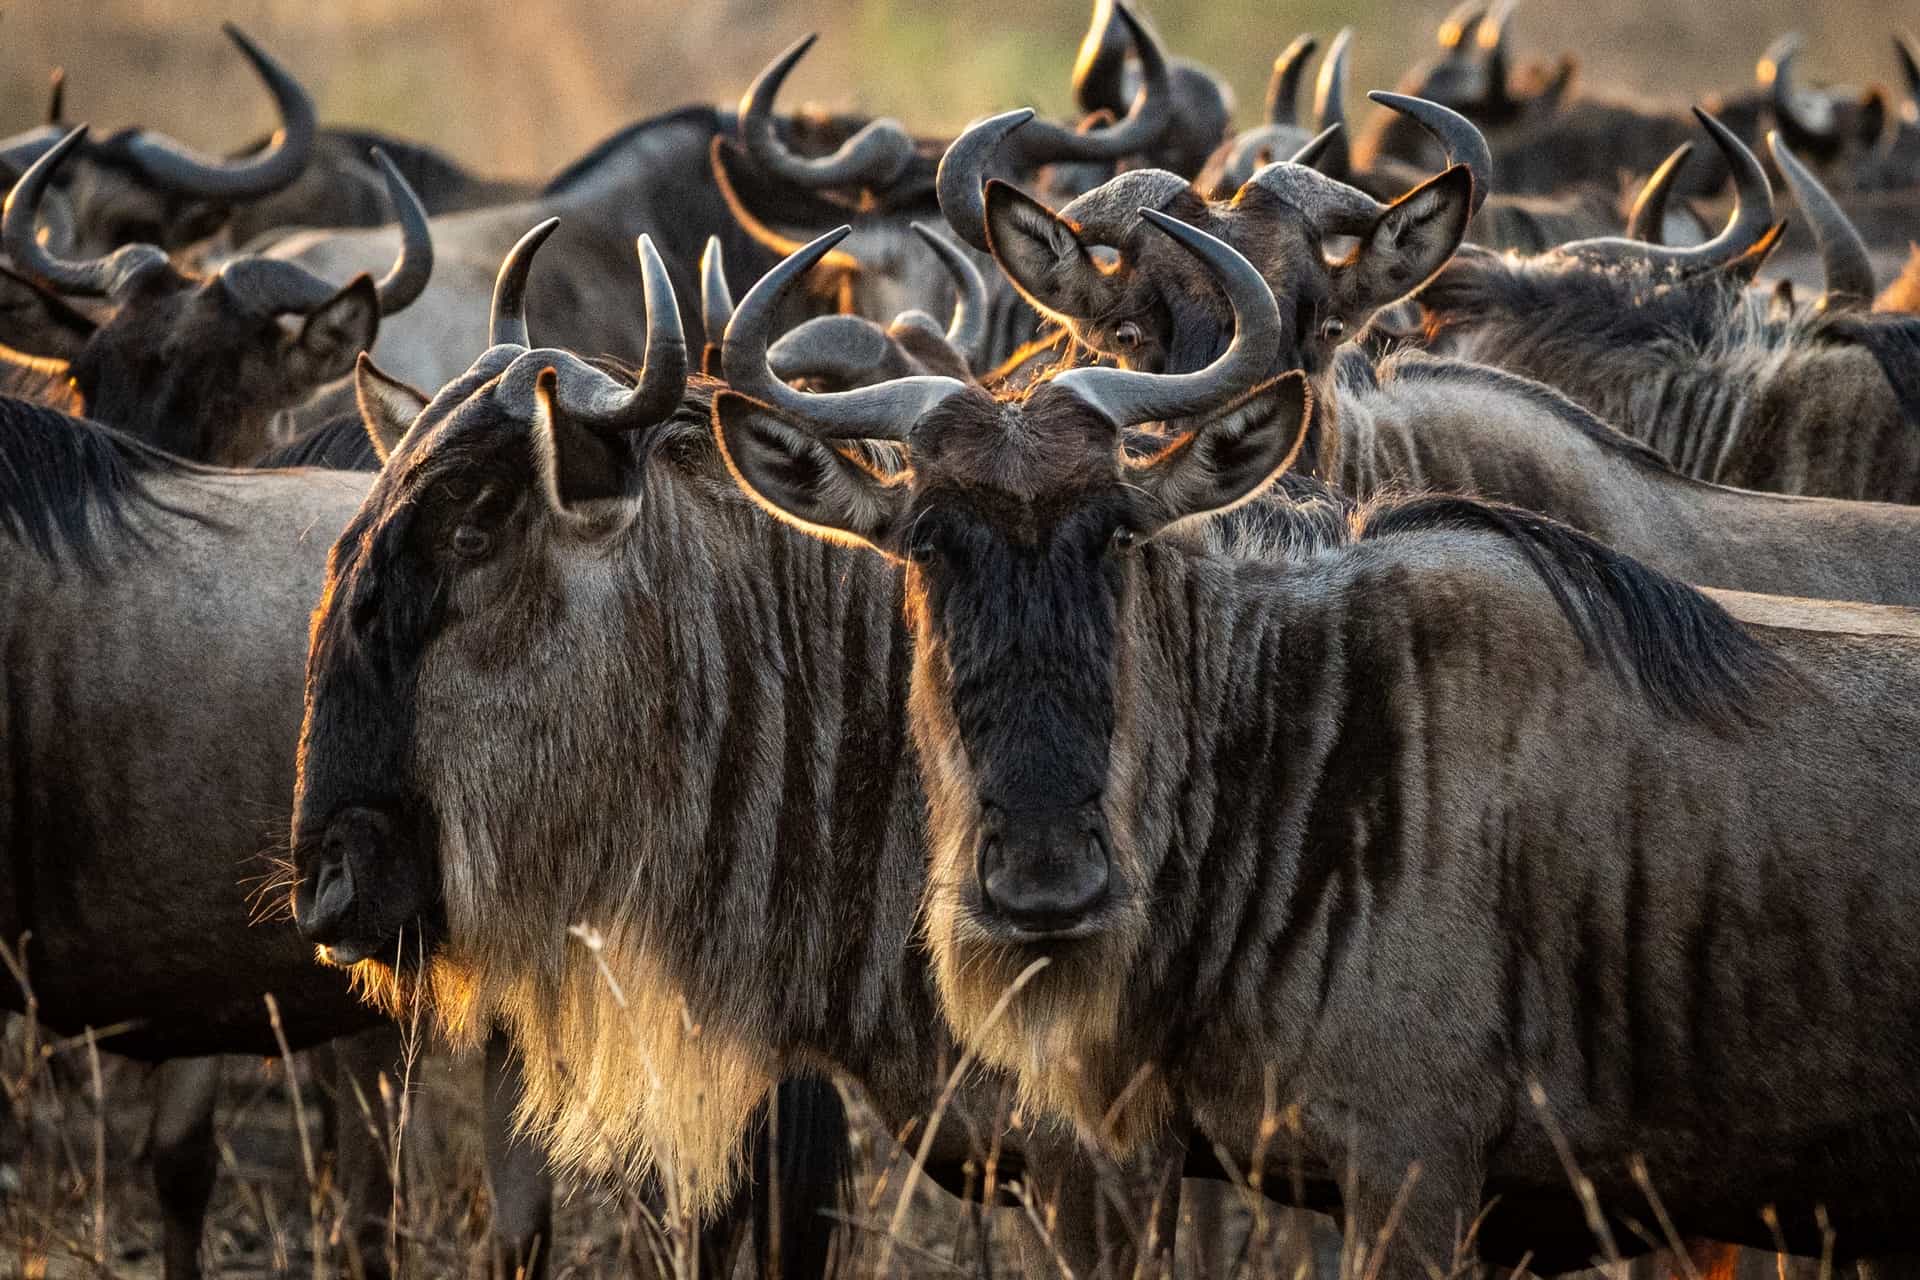 Best of Serengeti migration - The calving season